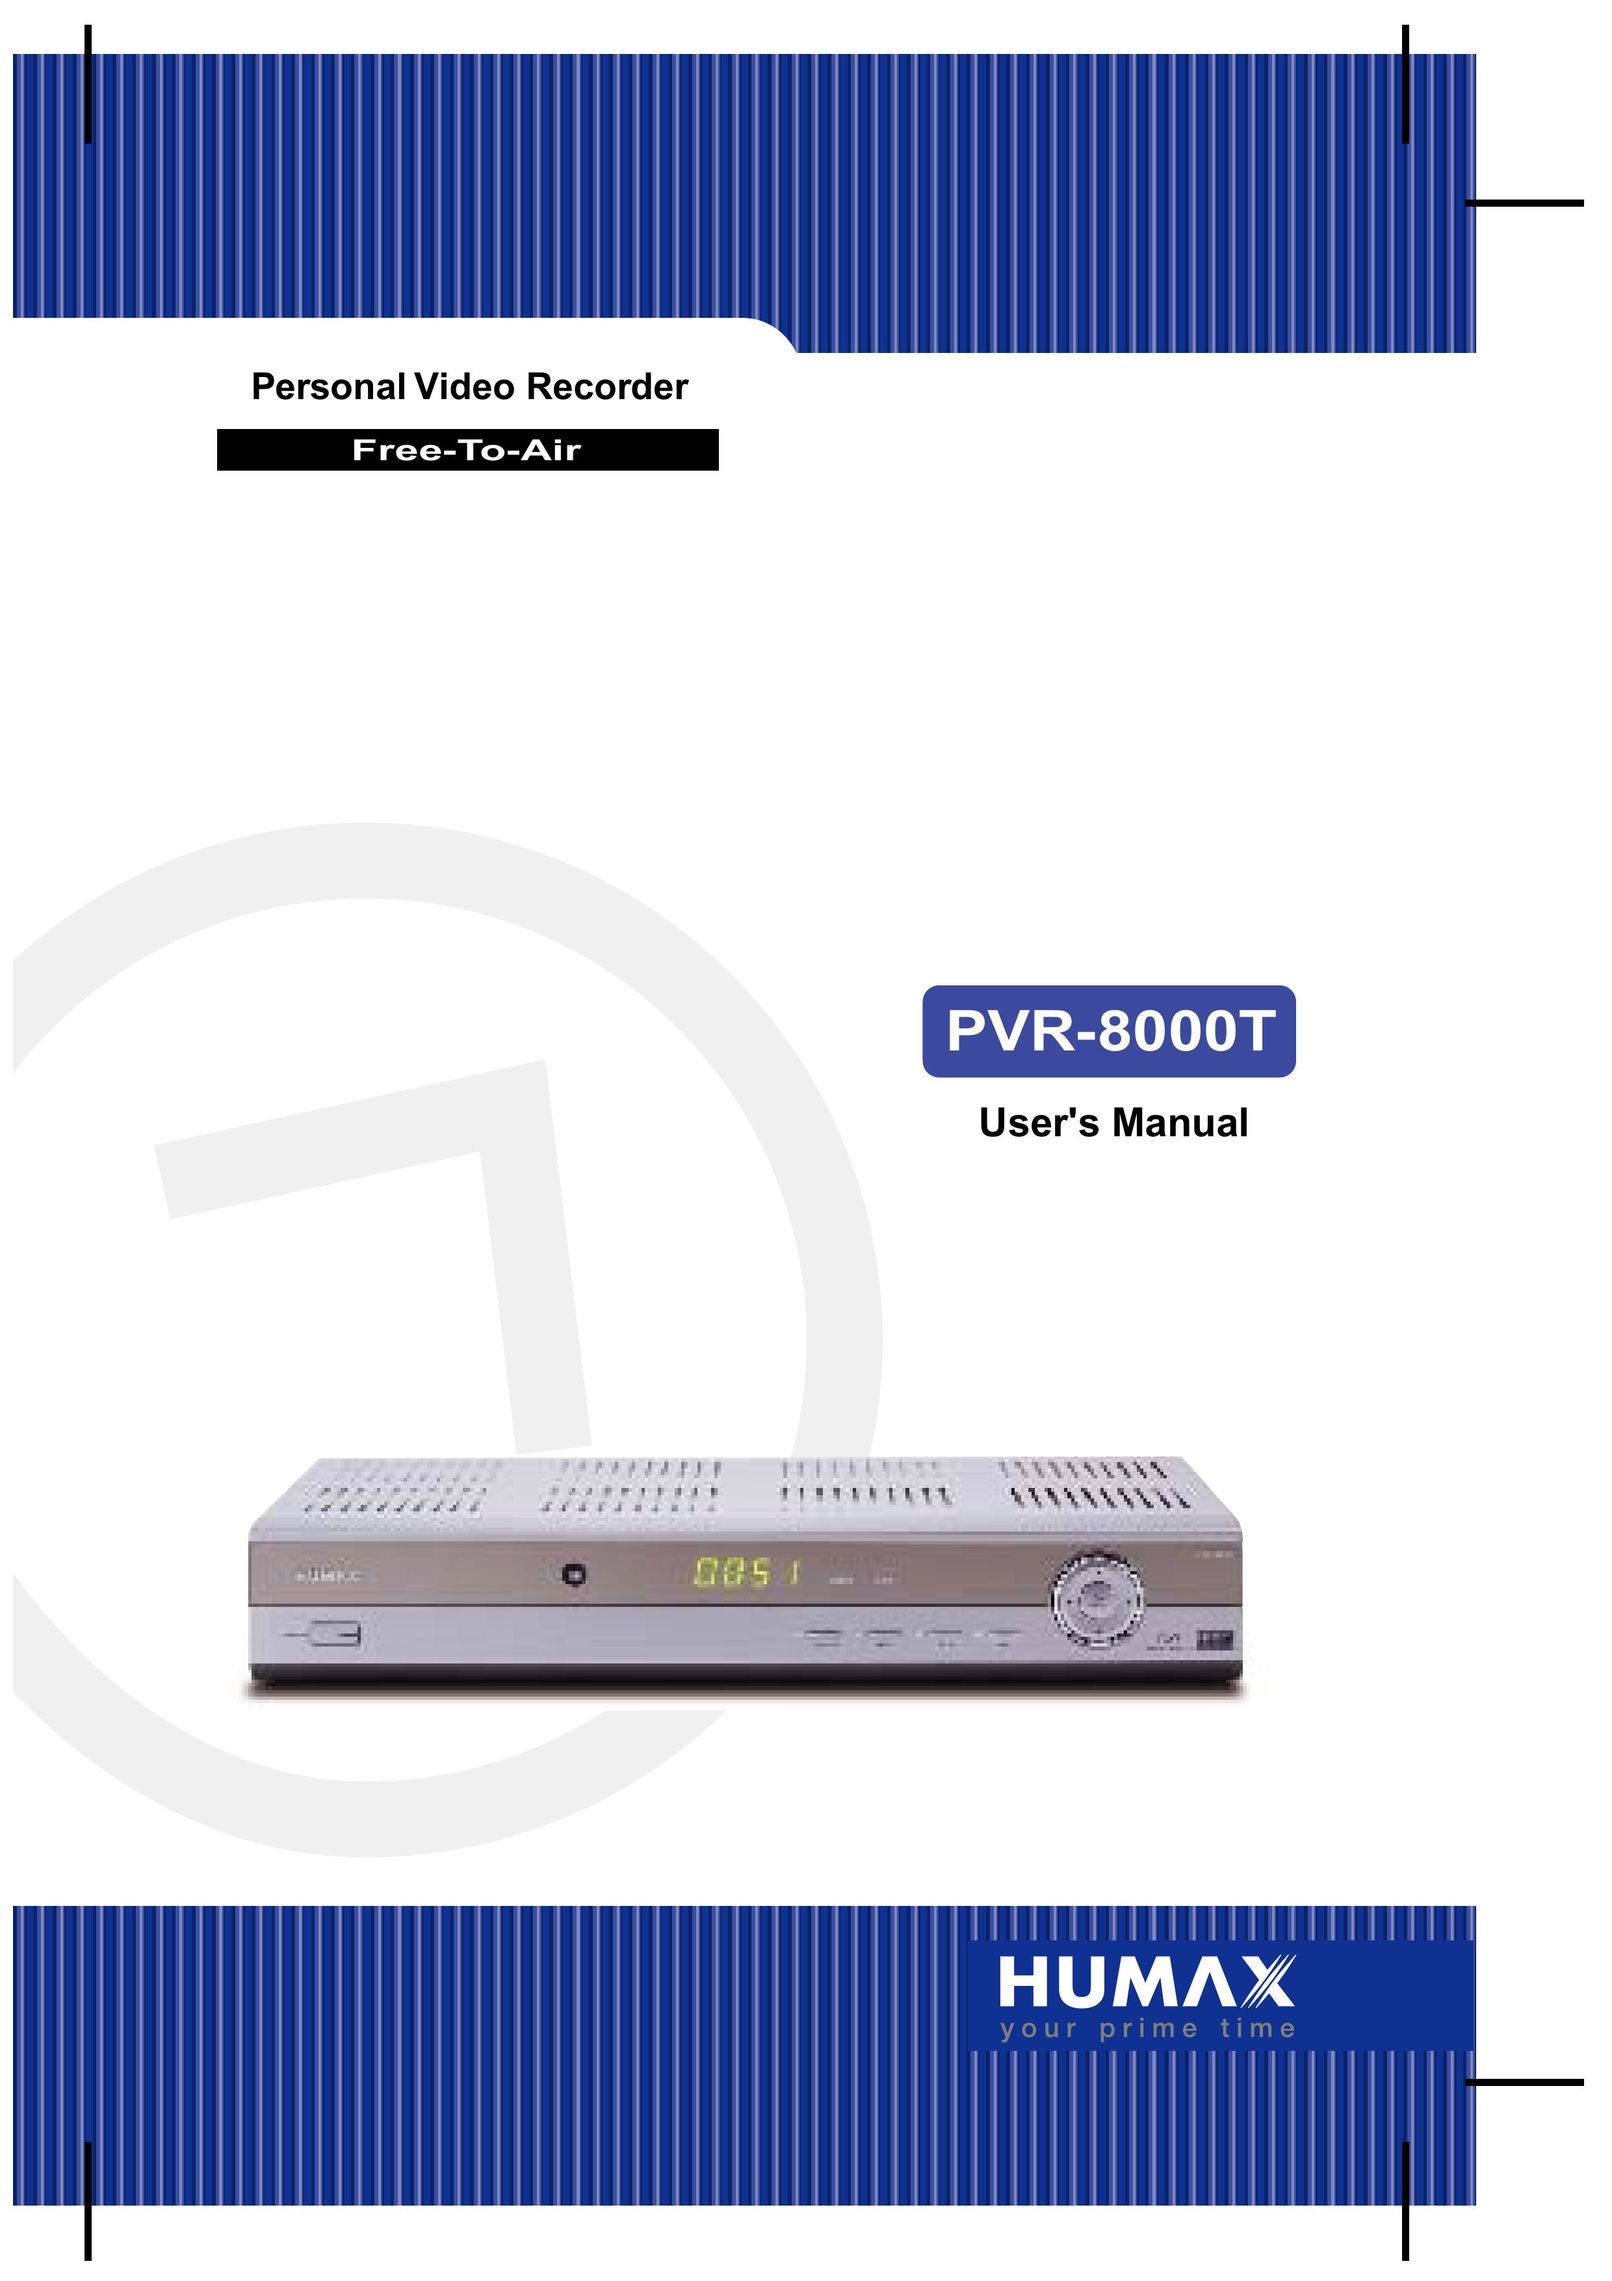 Humax PVR-8000T DVR User Manual